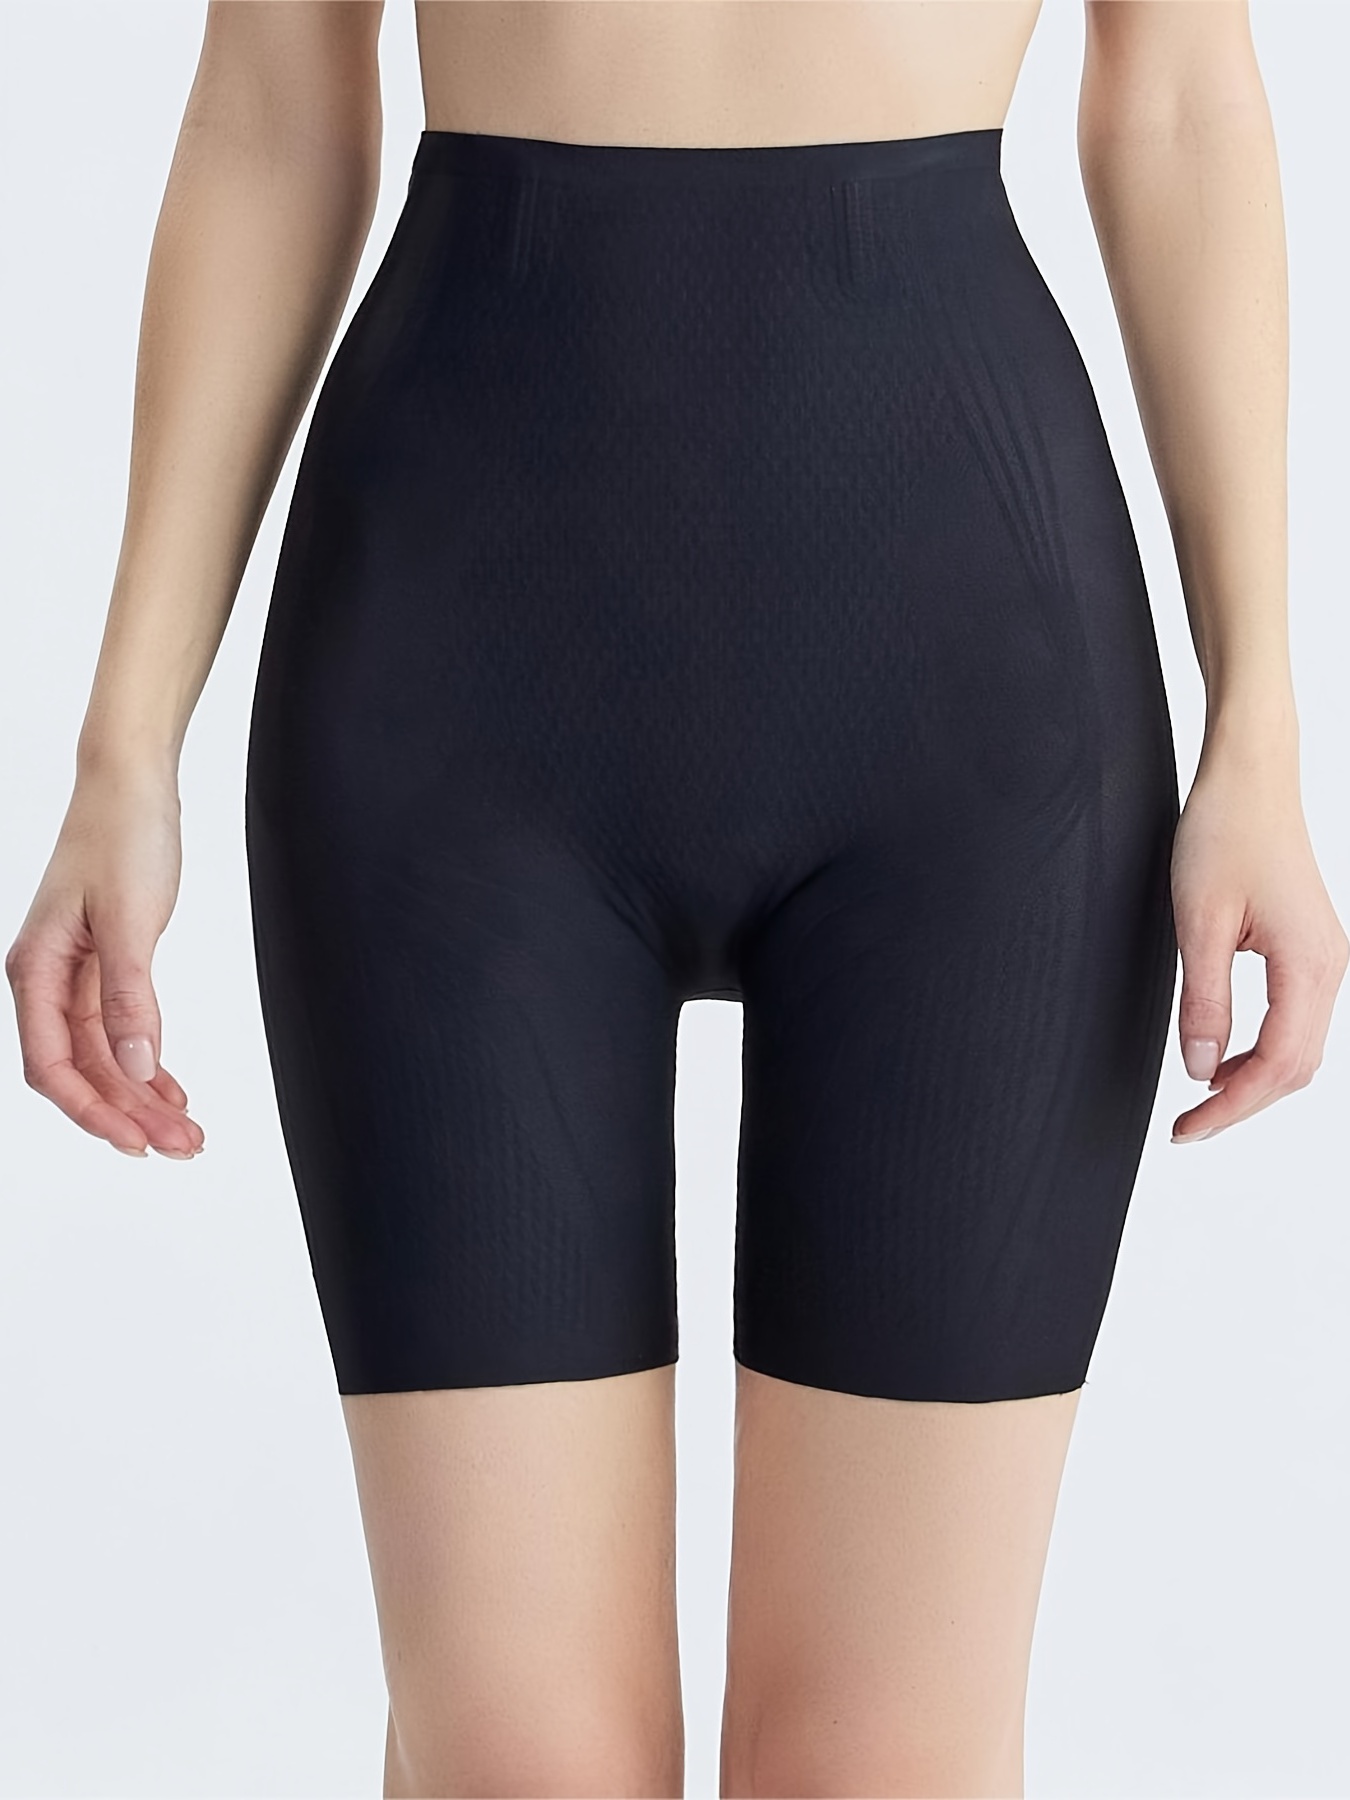 Butt Lifter Tummy Control Shorts, Comfortable & Breathable High Waist  Shapewear Jegging, Women's Underwear & Shapewear